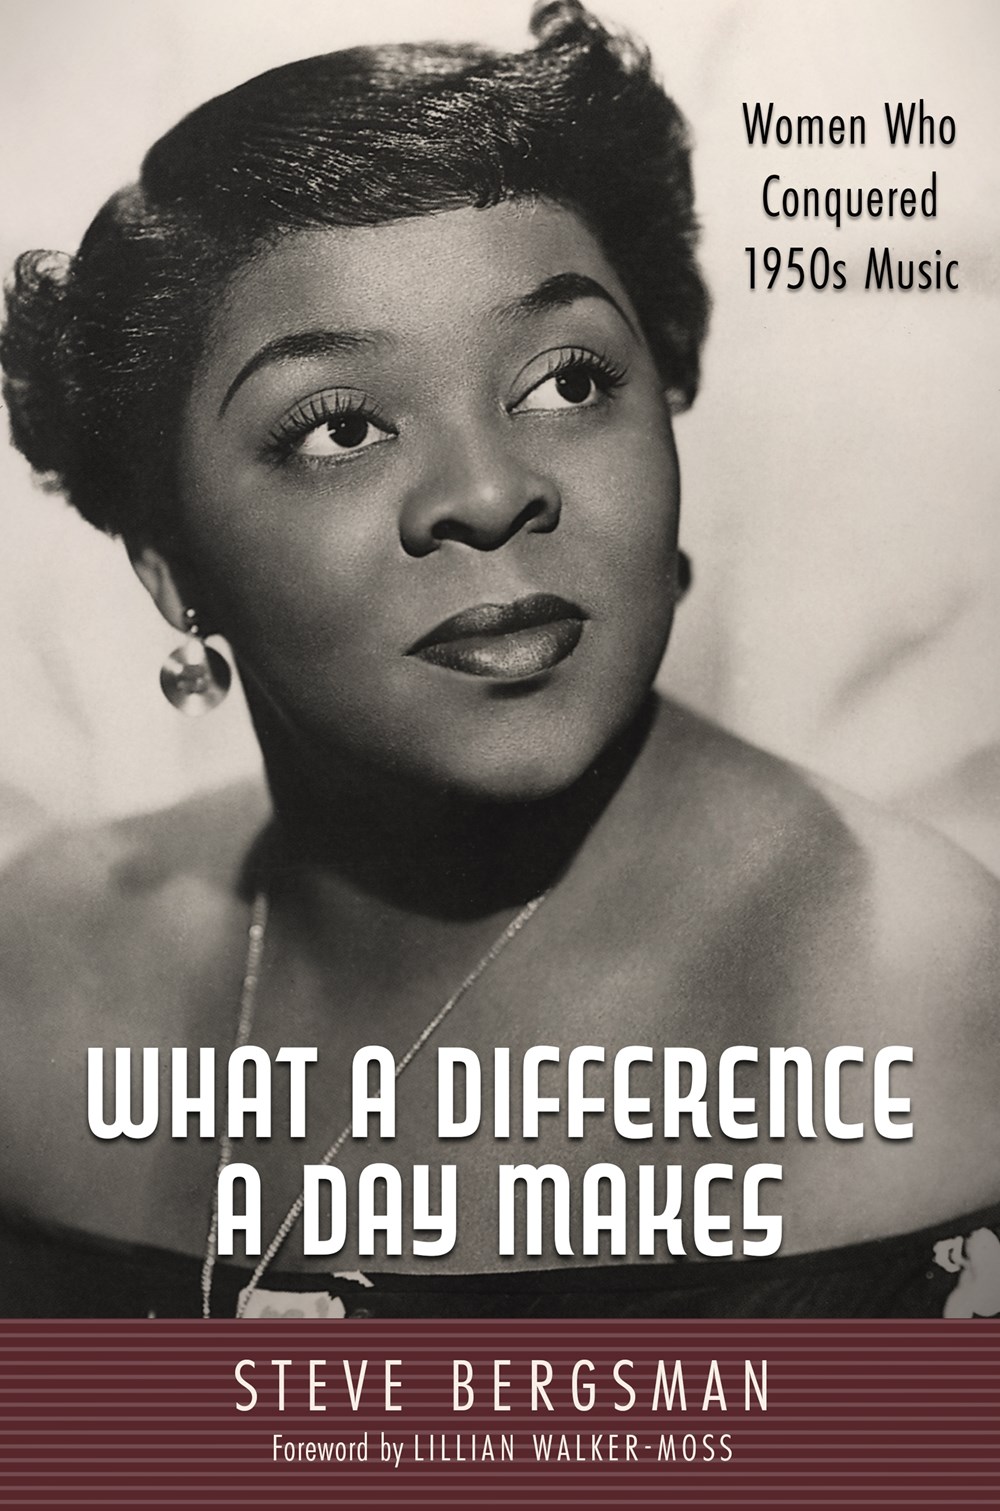 She Sings the Songs | Women Pop Singers of the 1950s